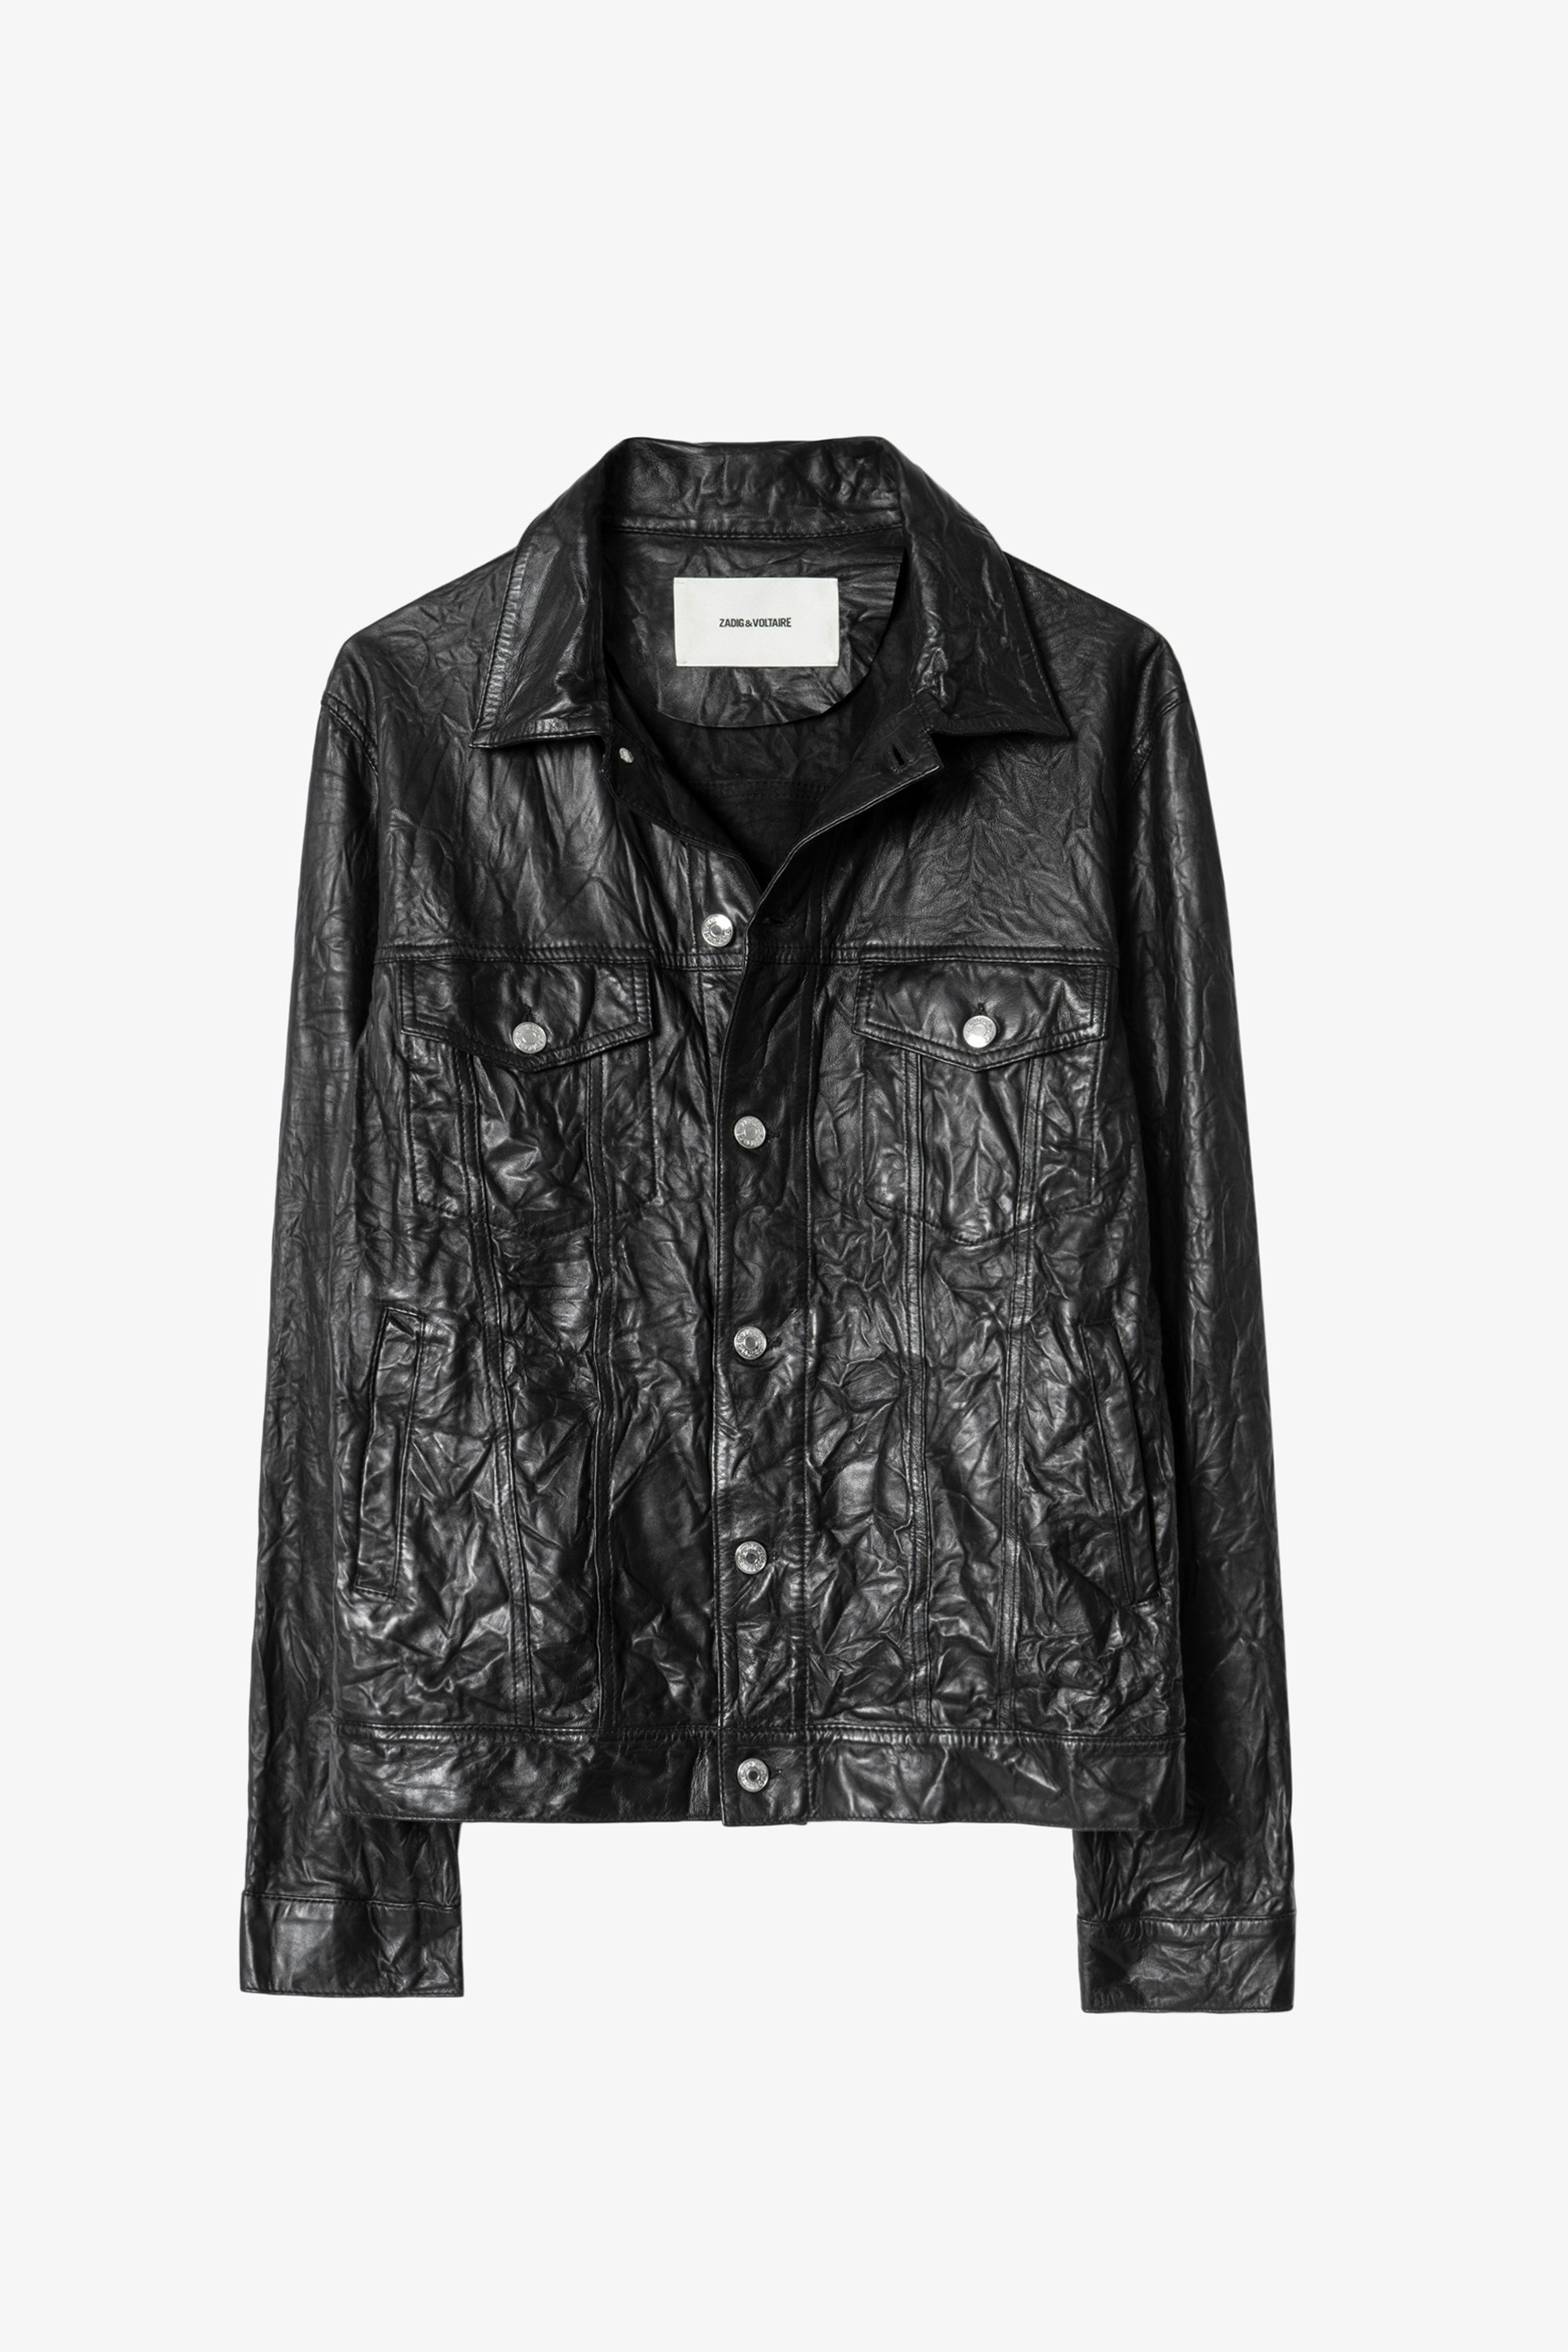 Creased Leather Jacket - Men's black jacket